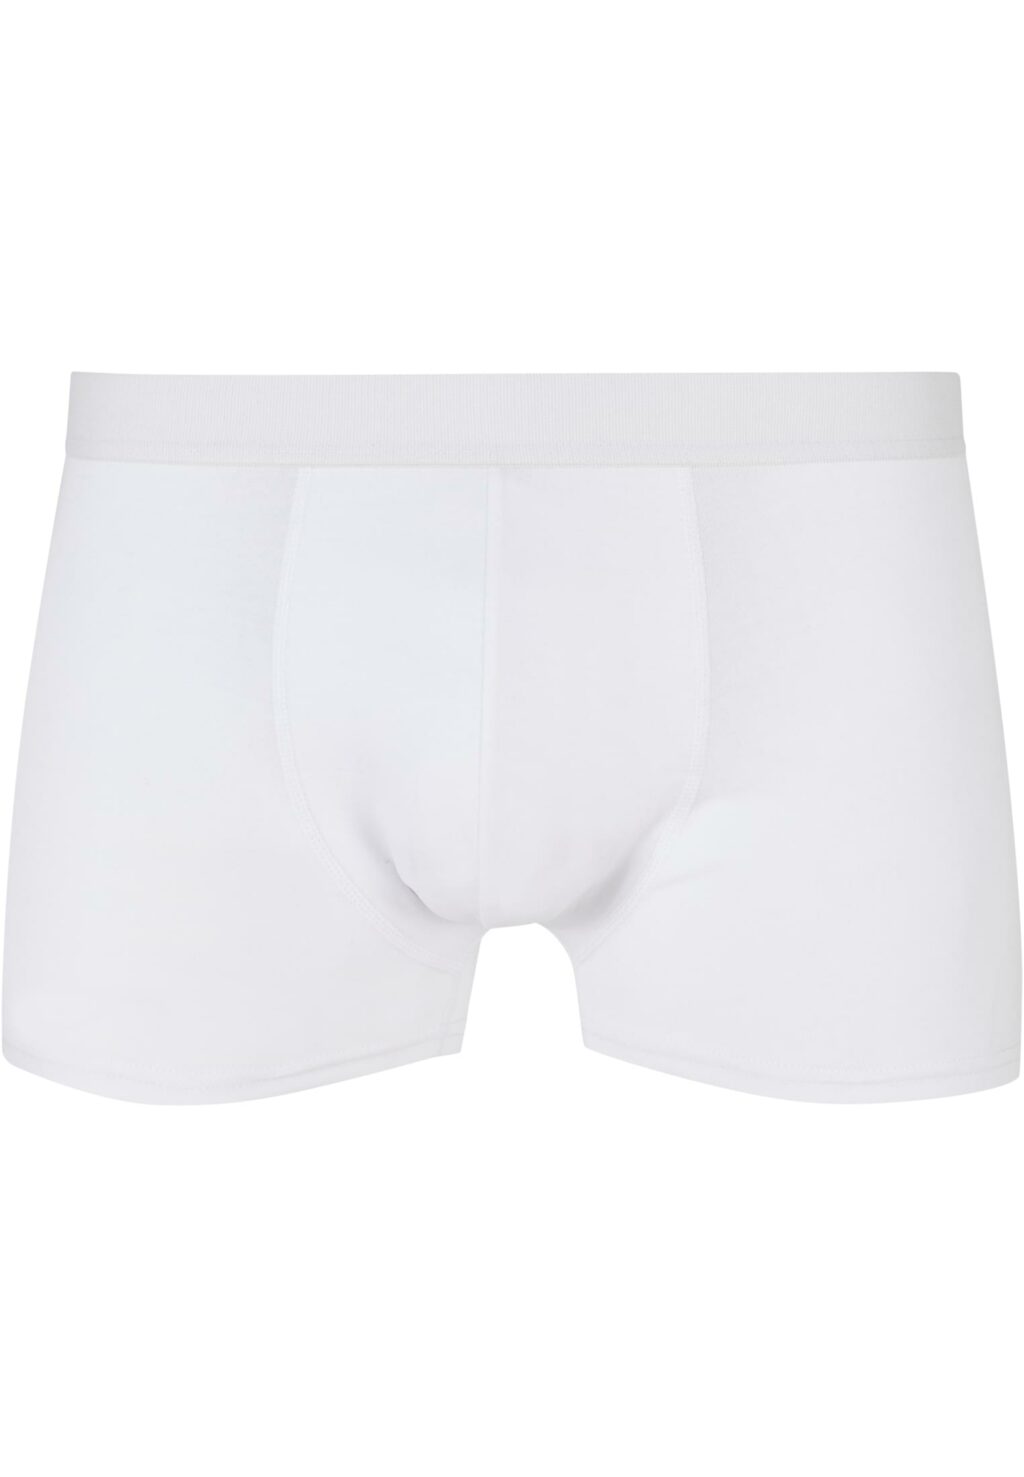 Urban Classics Solid Organic Cotton Boxer Shorts 5-Pack white+white+white+white+white TB6292